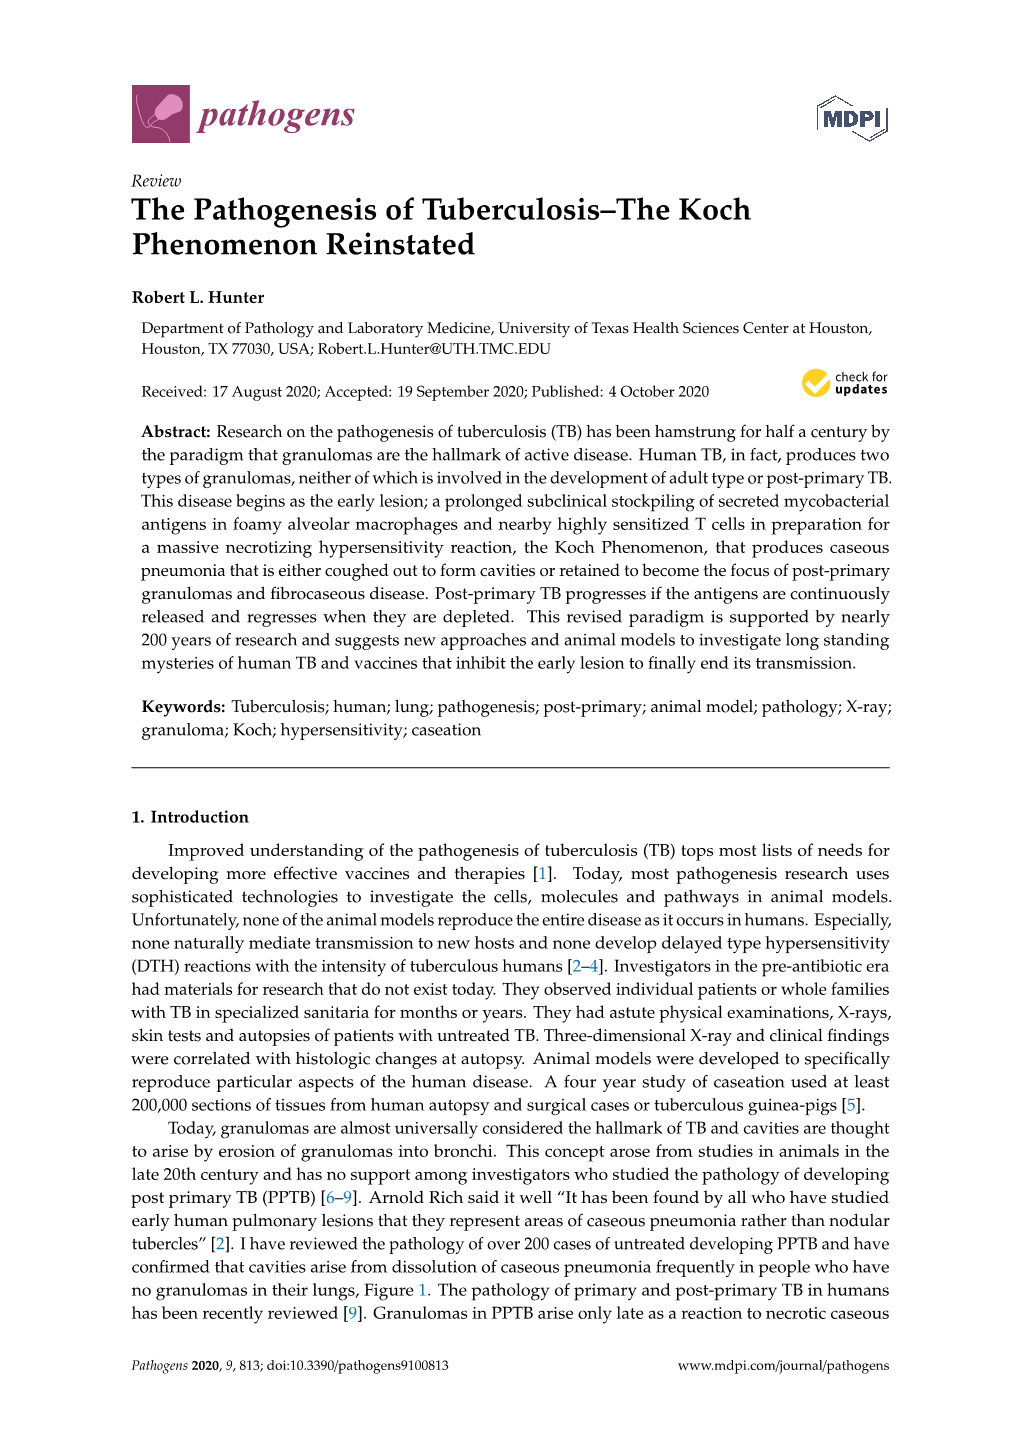 The Pathogenesis of Tuberculosis–The Koch Phenomenon Reinstated